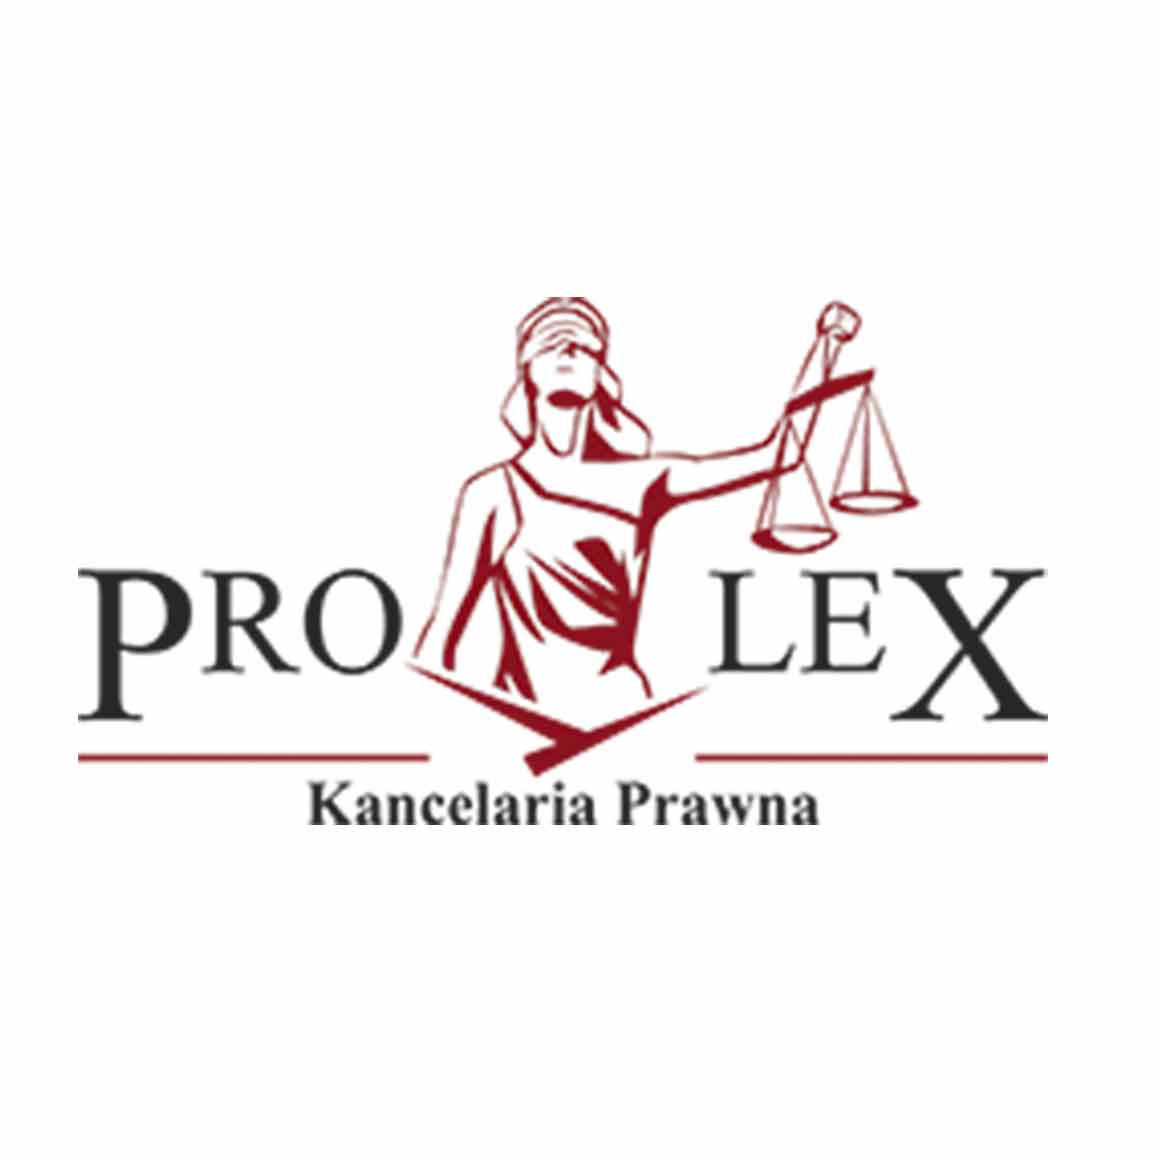 Kancelaria prawna Prolex